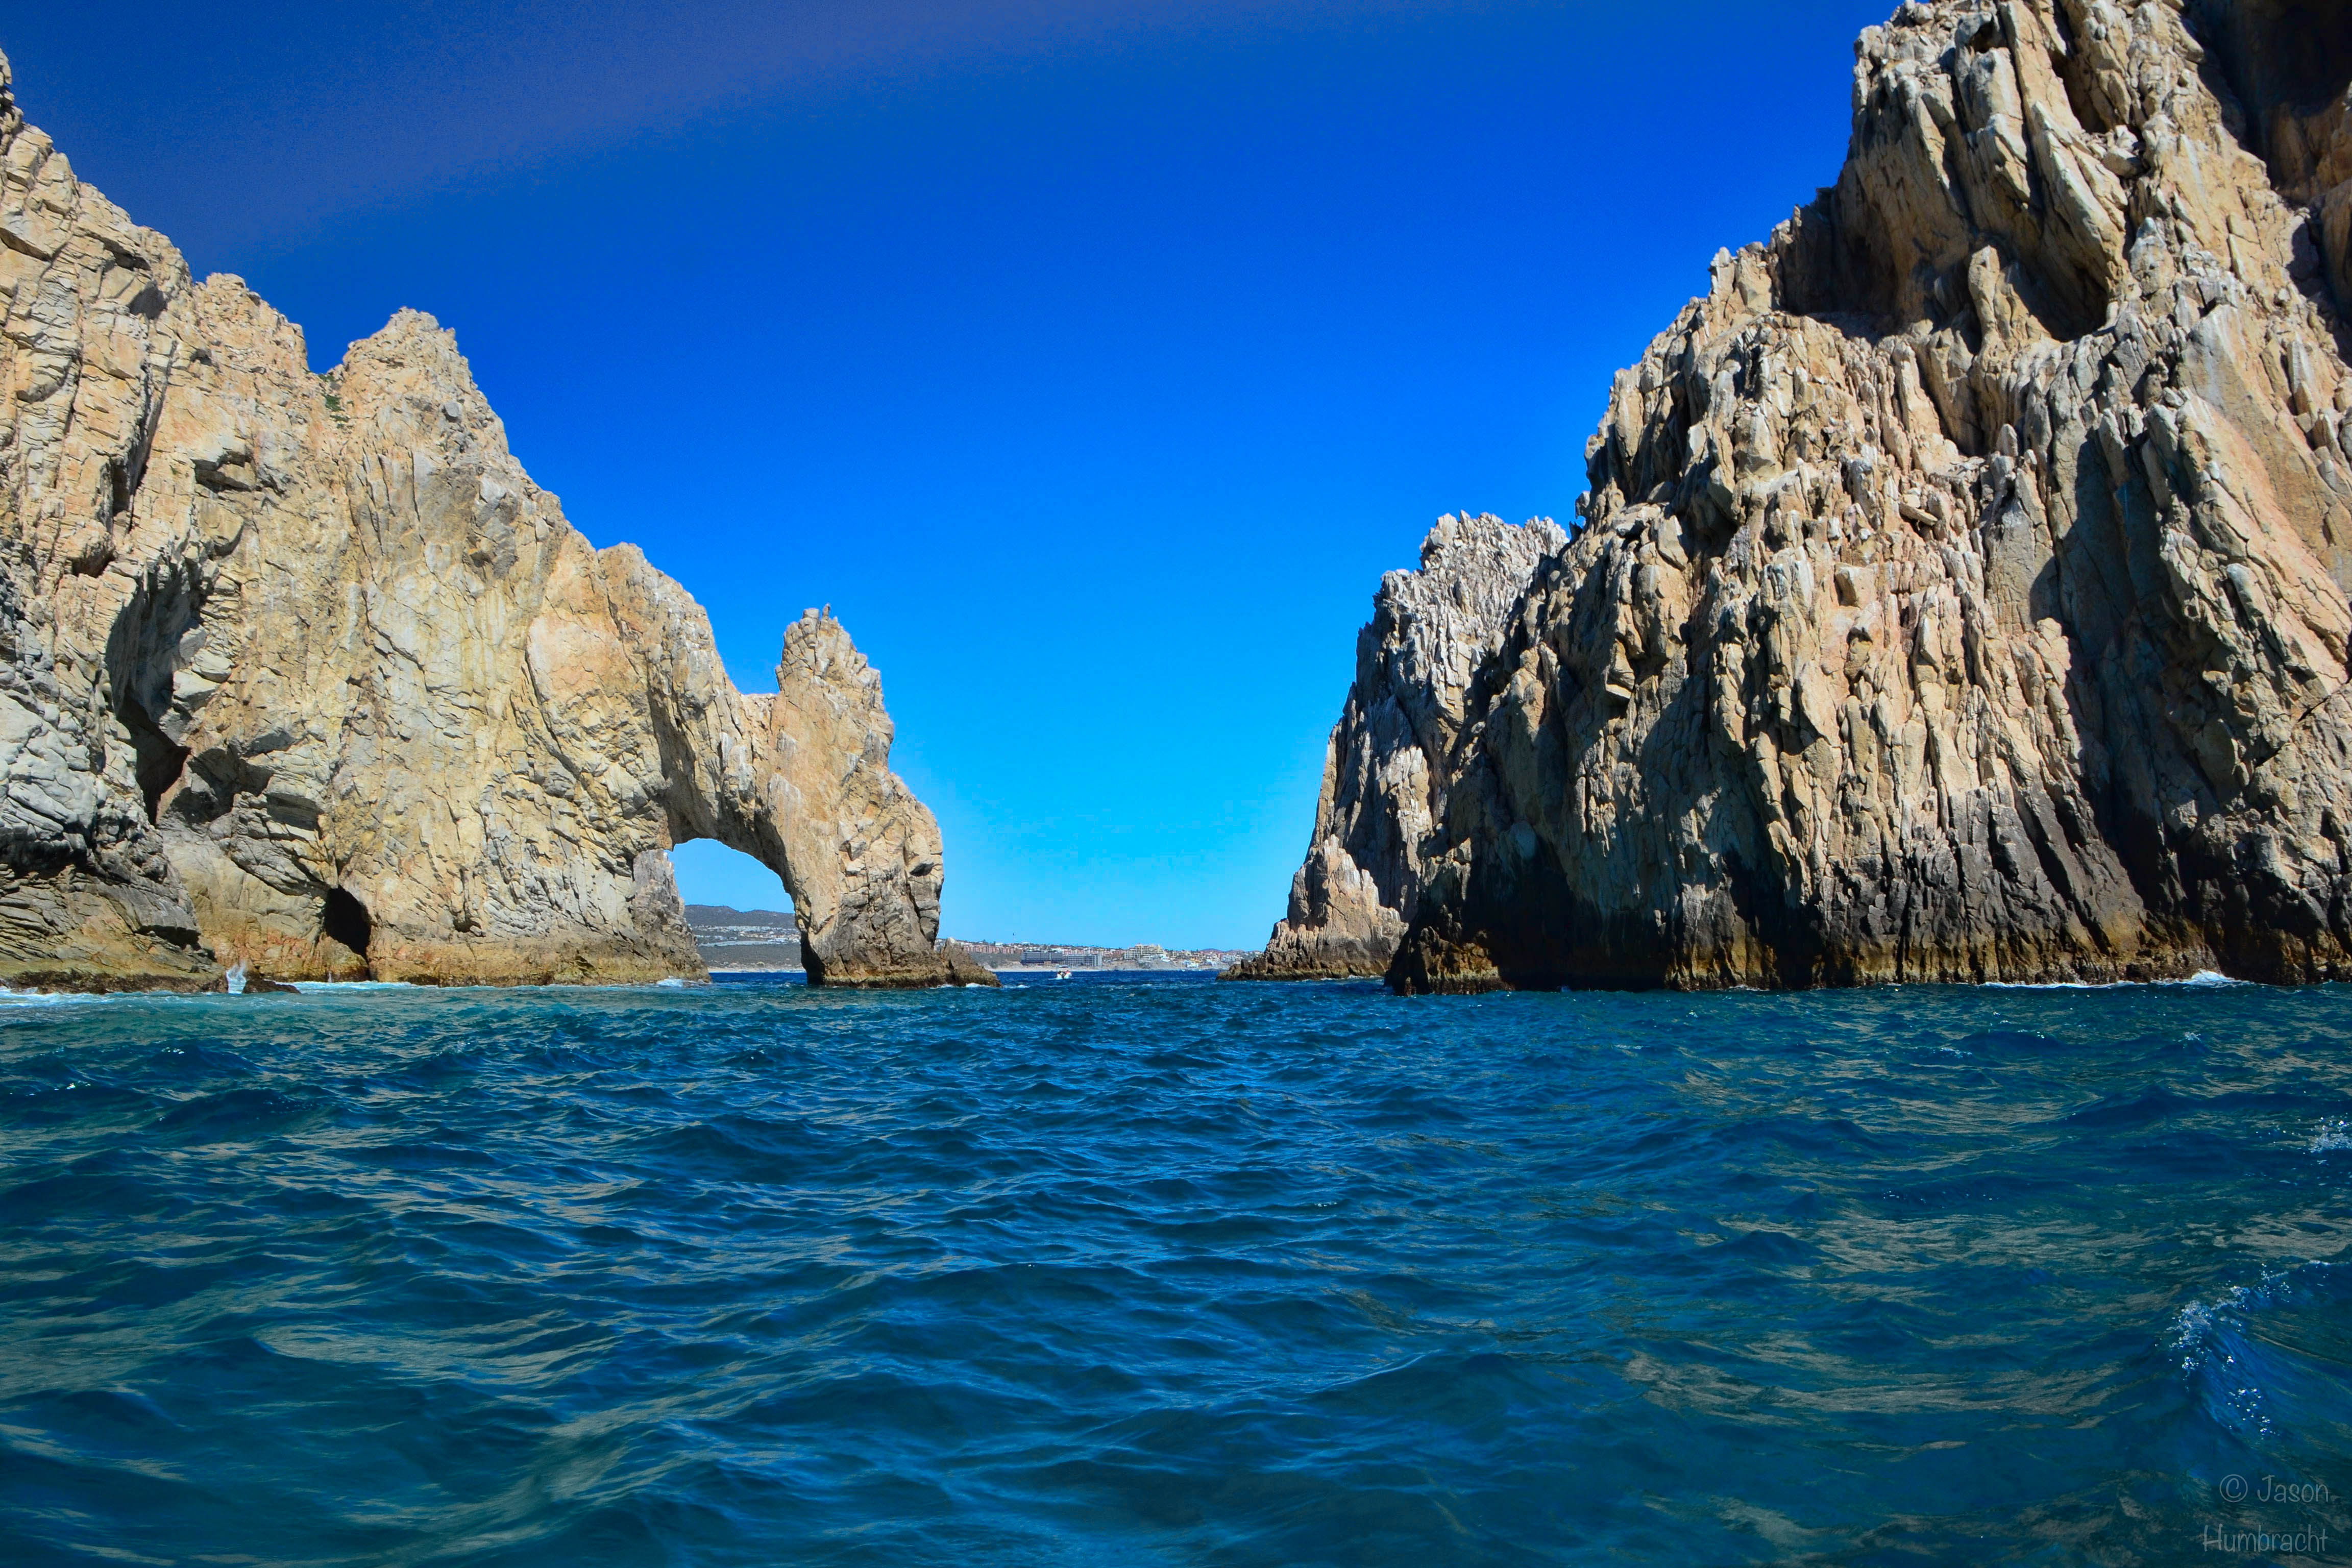 The Arch-Cabo San Lucas-Mexico | jhumbracht | photography